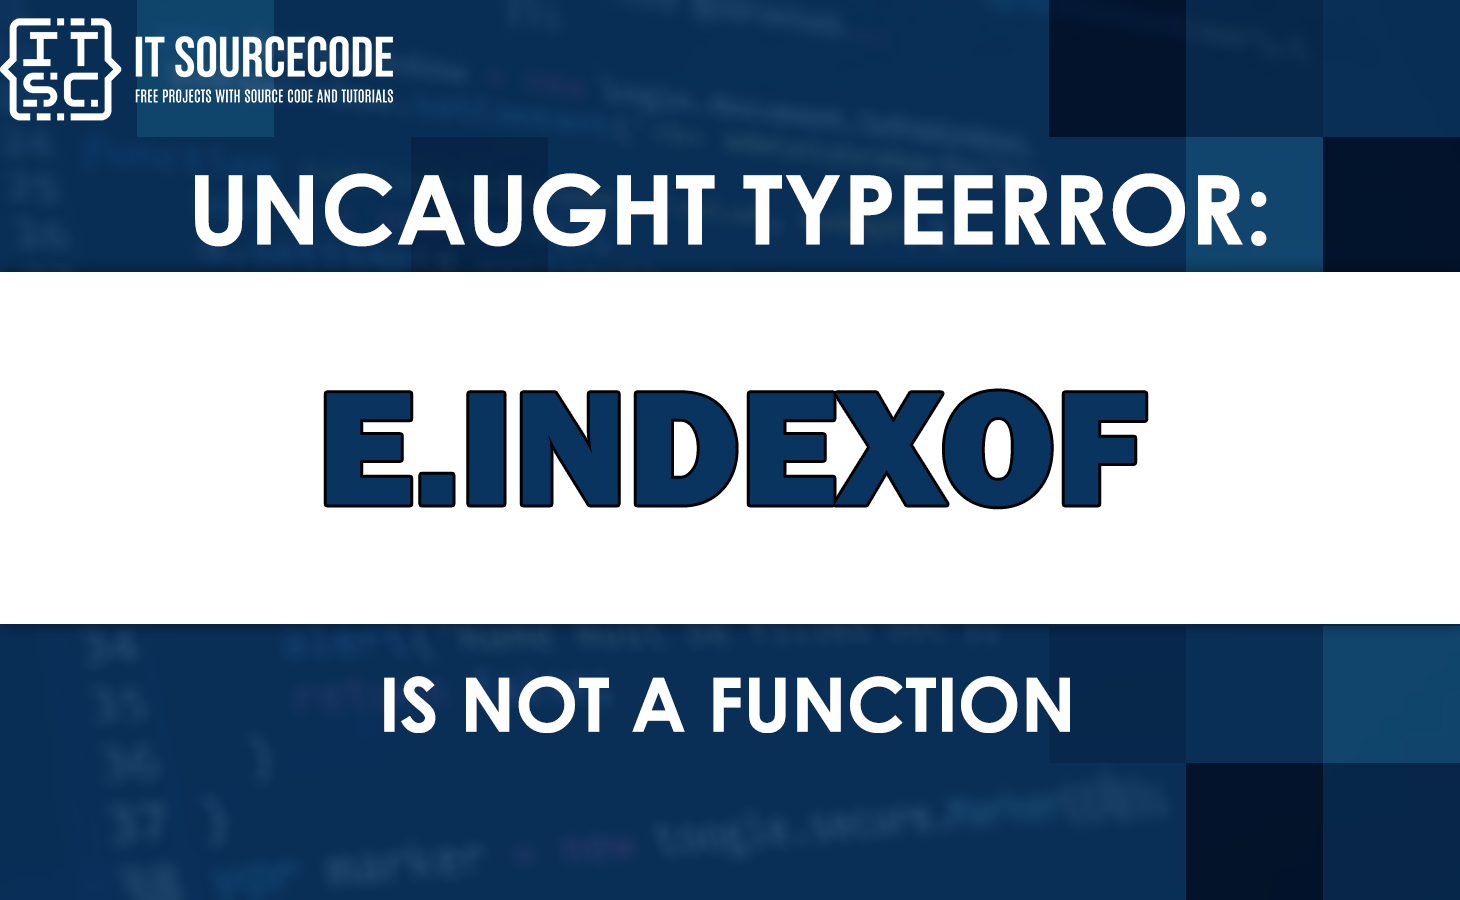 Uncaught typeerror: e.indexof is not a function